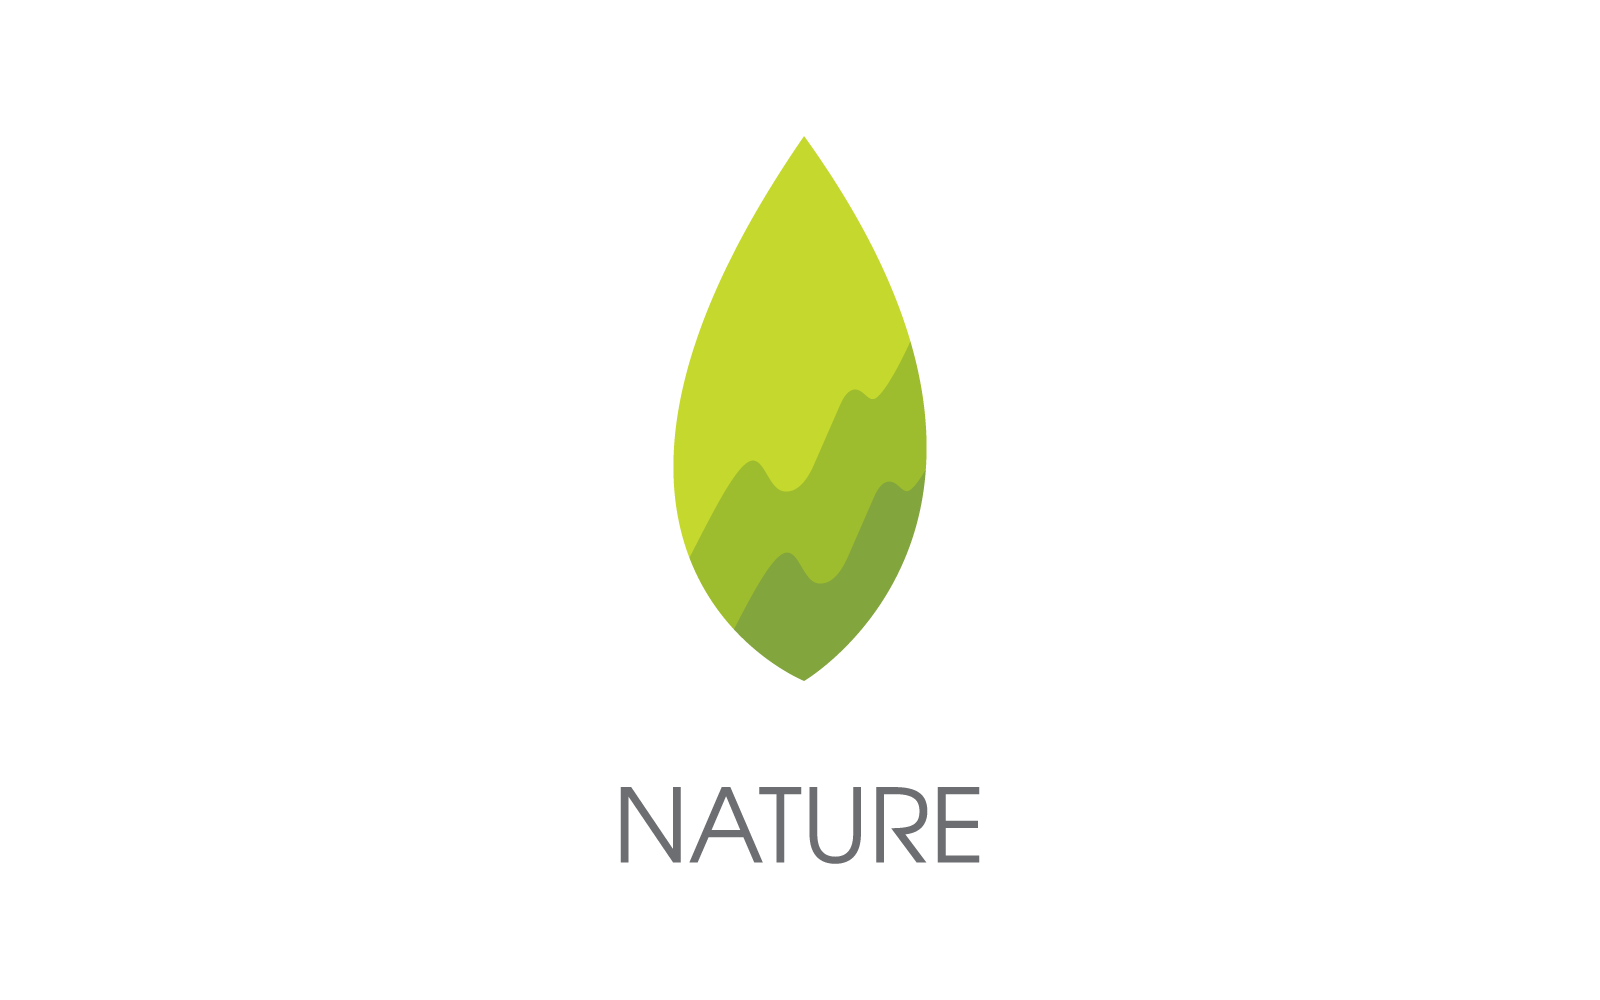 Green leaf illustration nature logo icon vector